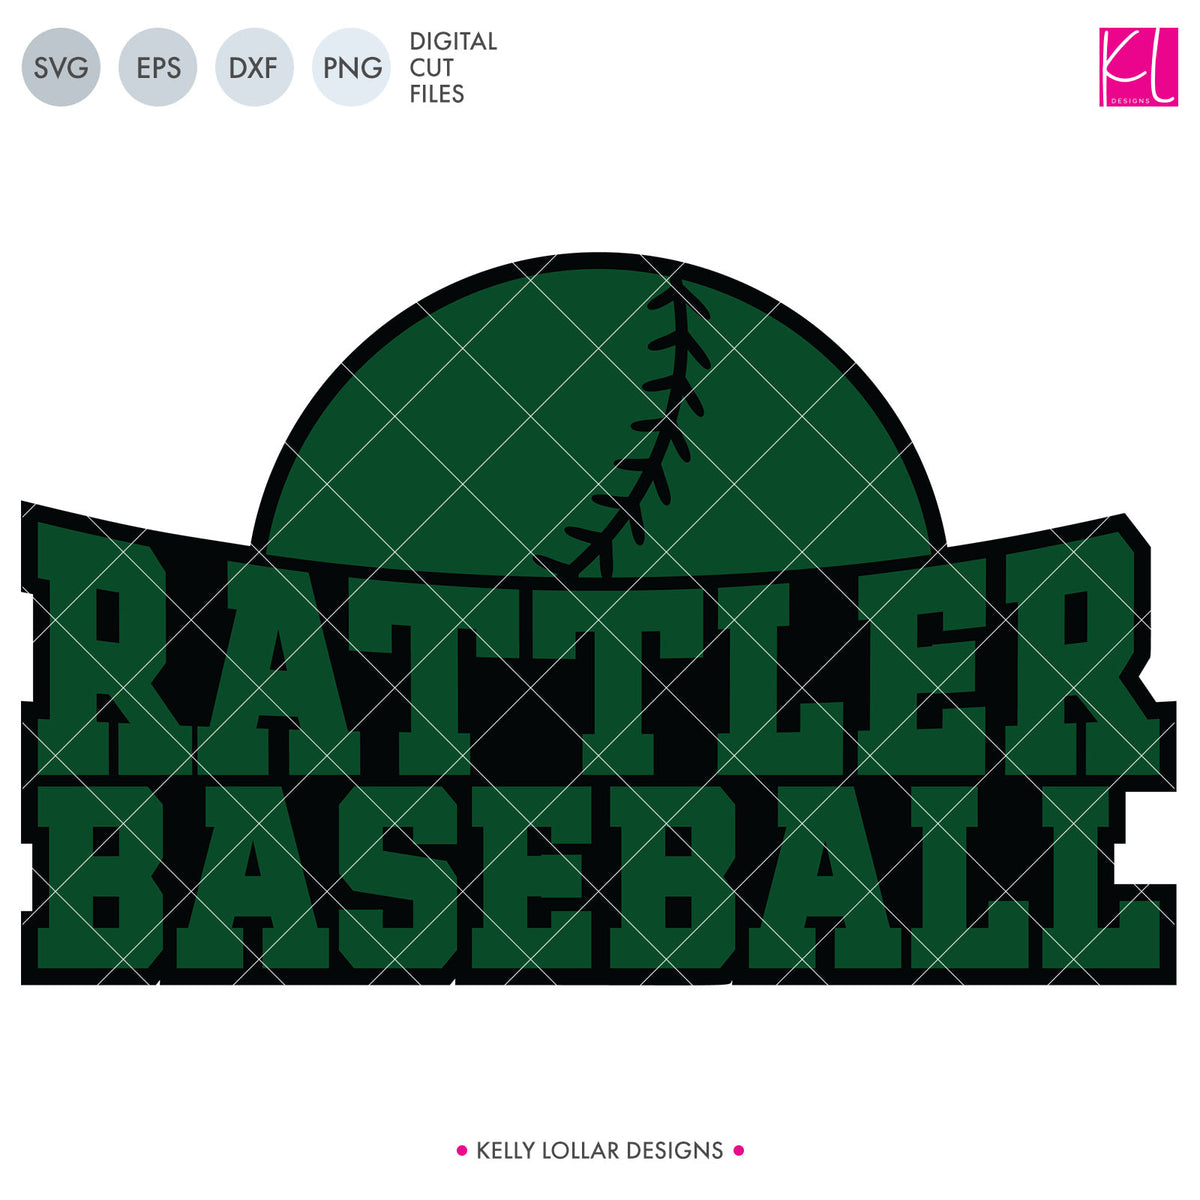 Rattlers Baseball &amp; Softball Bundle | SVG DXF EPS PNG Cut Files